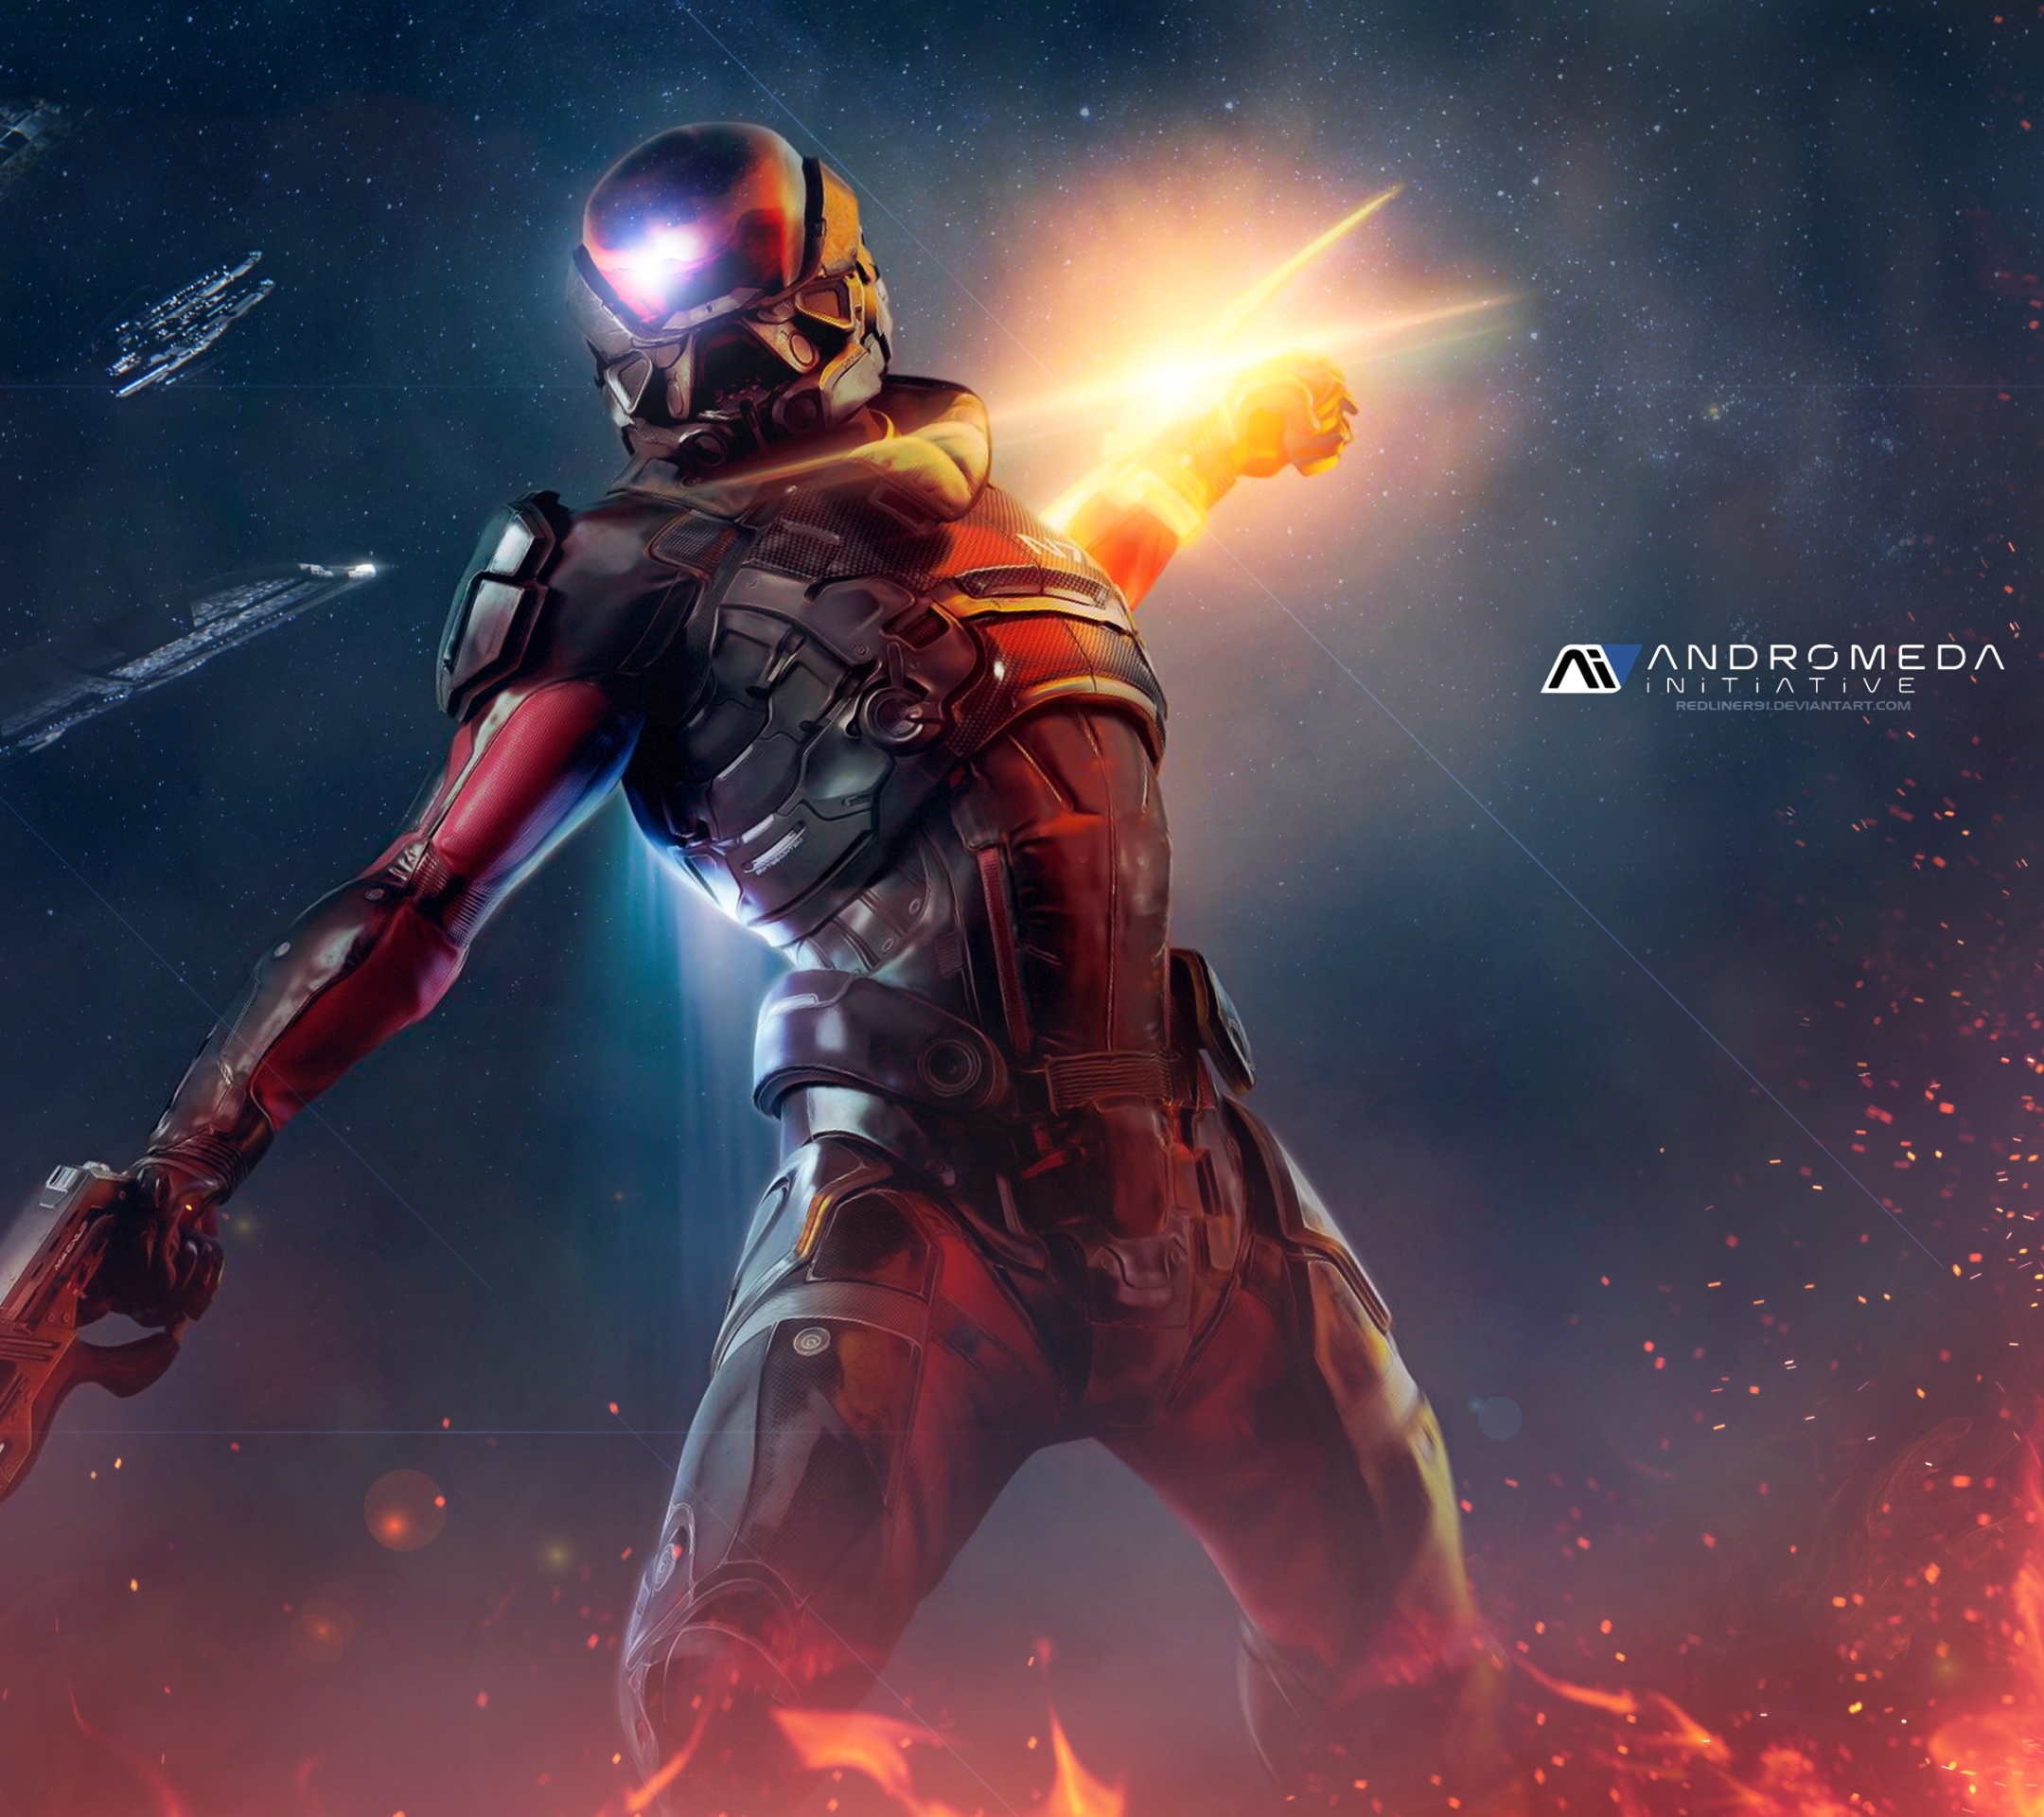 Handy-Wallpaper Mass Effect, Computerspiele, Mass Effect: Andromeda kostenlos herunterladen.